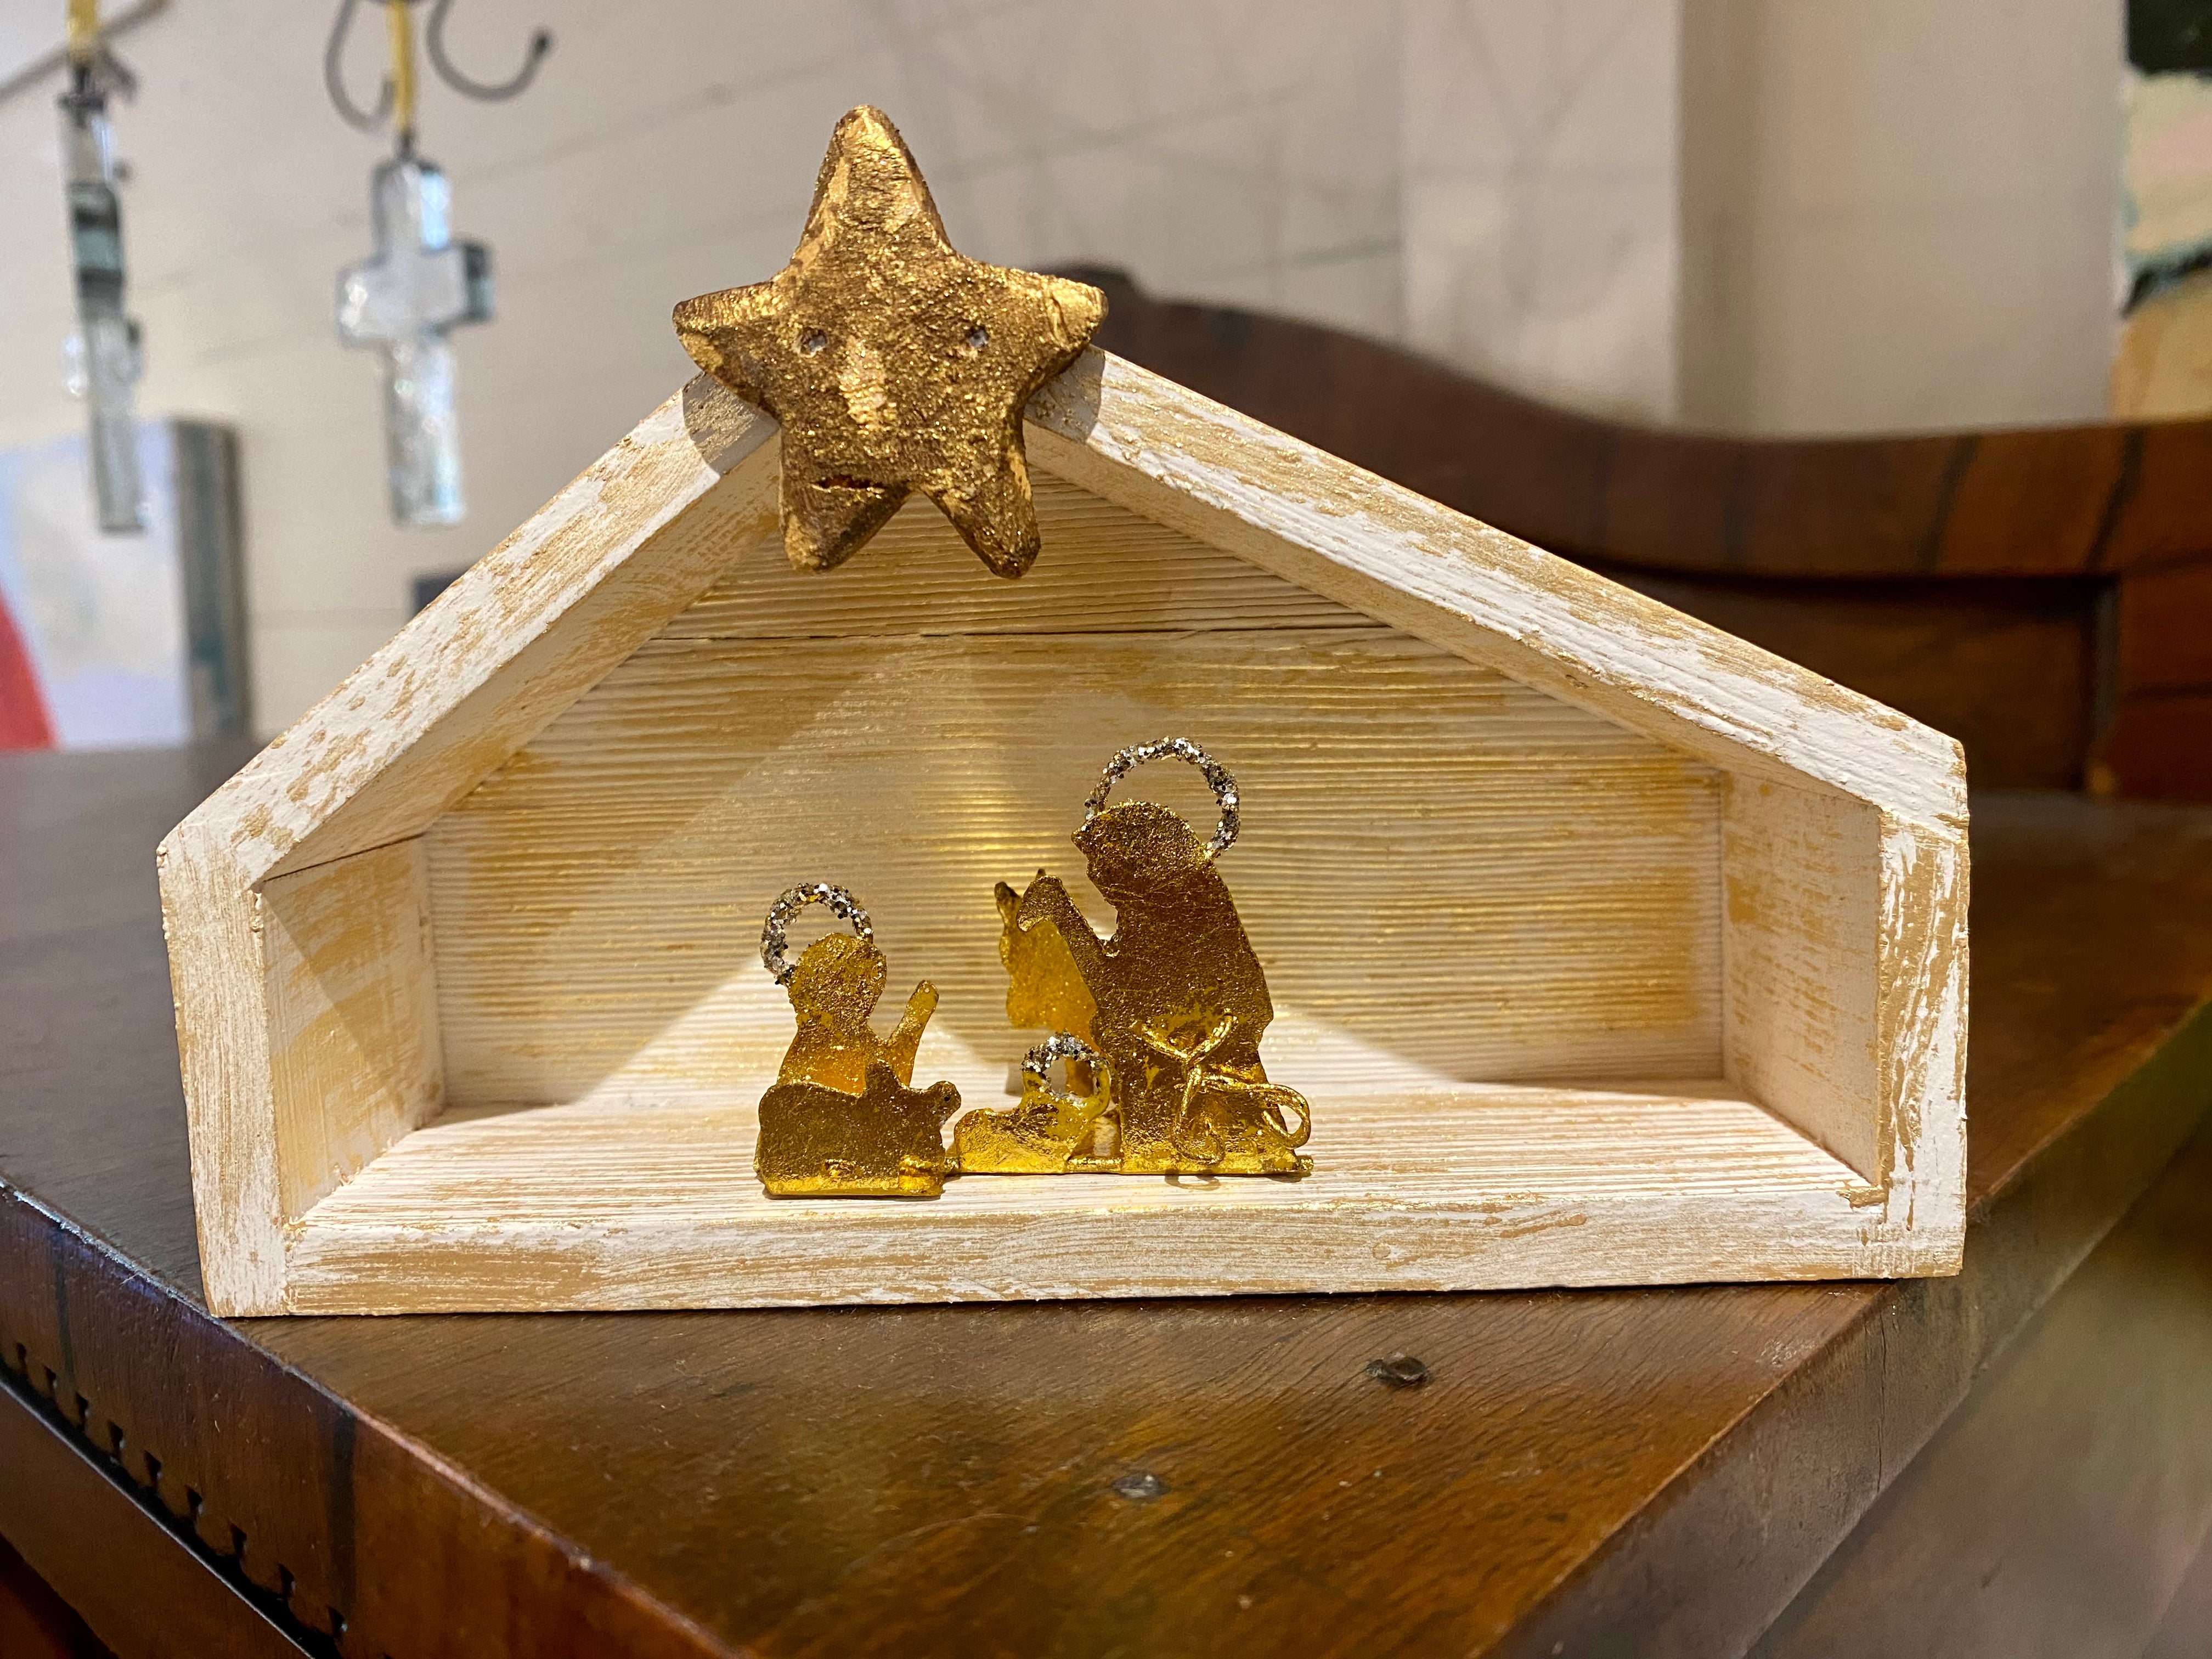 Nativity Silhouette in creche with Gold Star